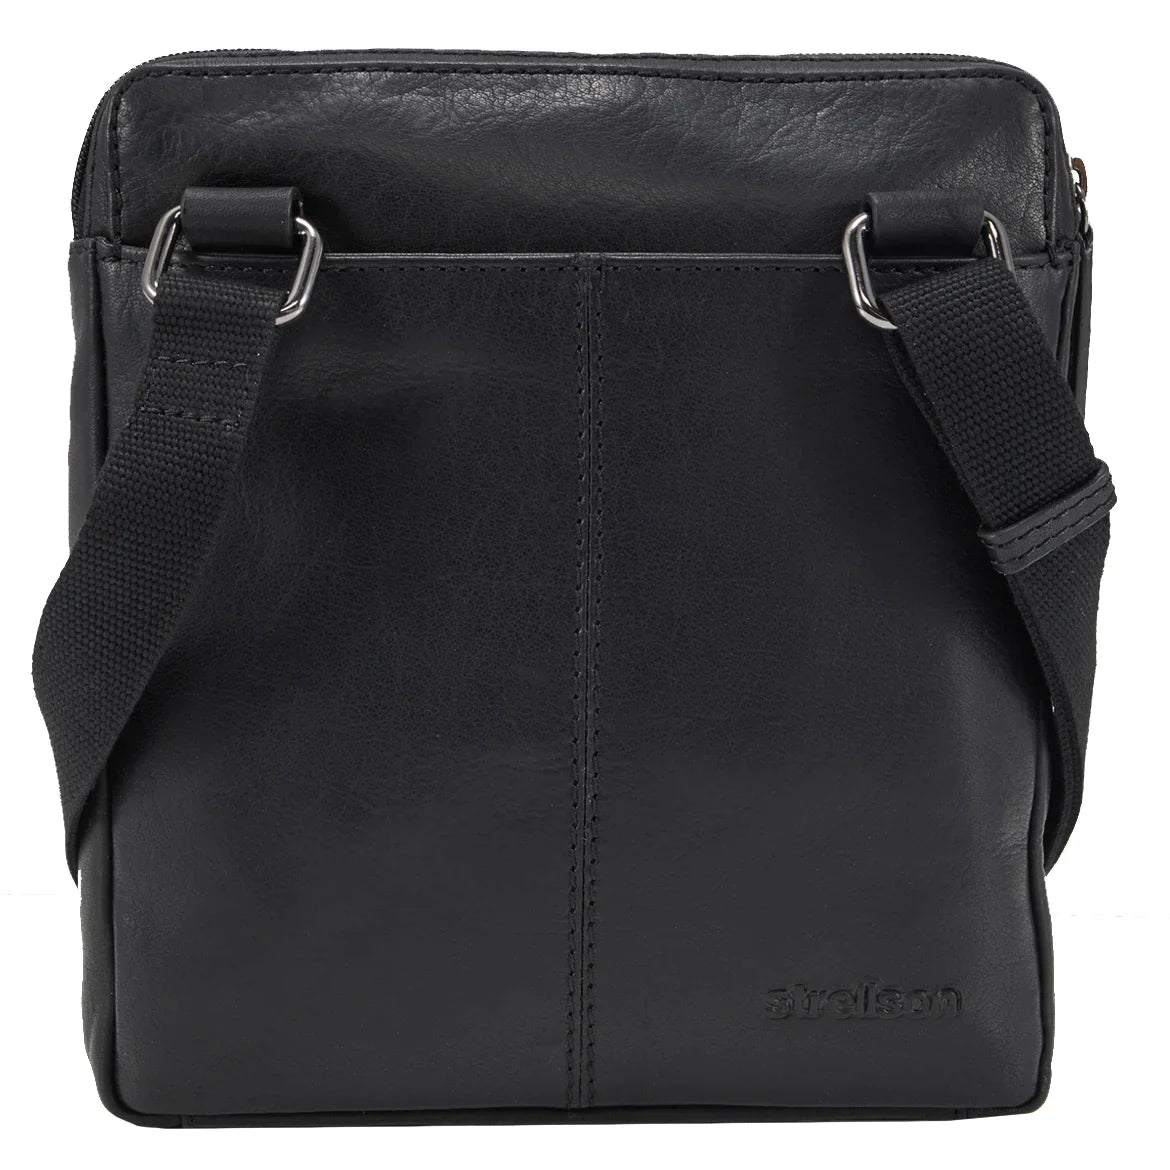 Strellson Hyde Park Shoulderbag XSVZ 2 22 cm - Black